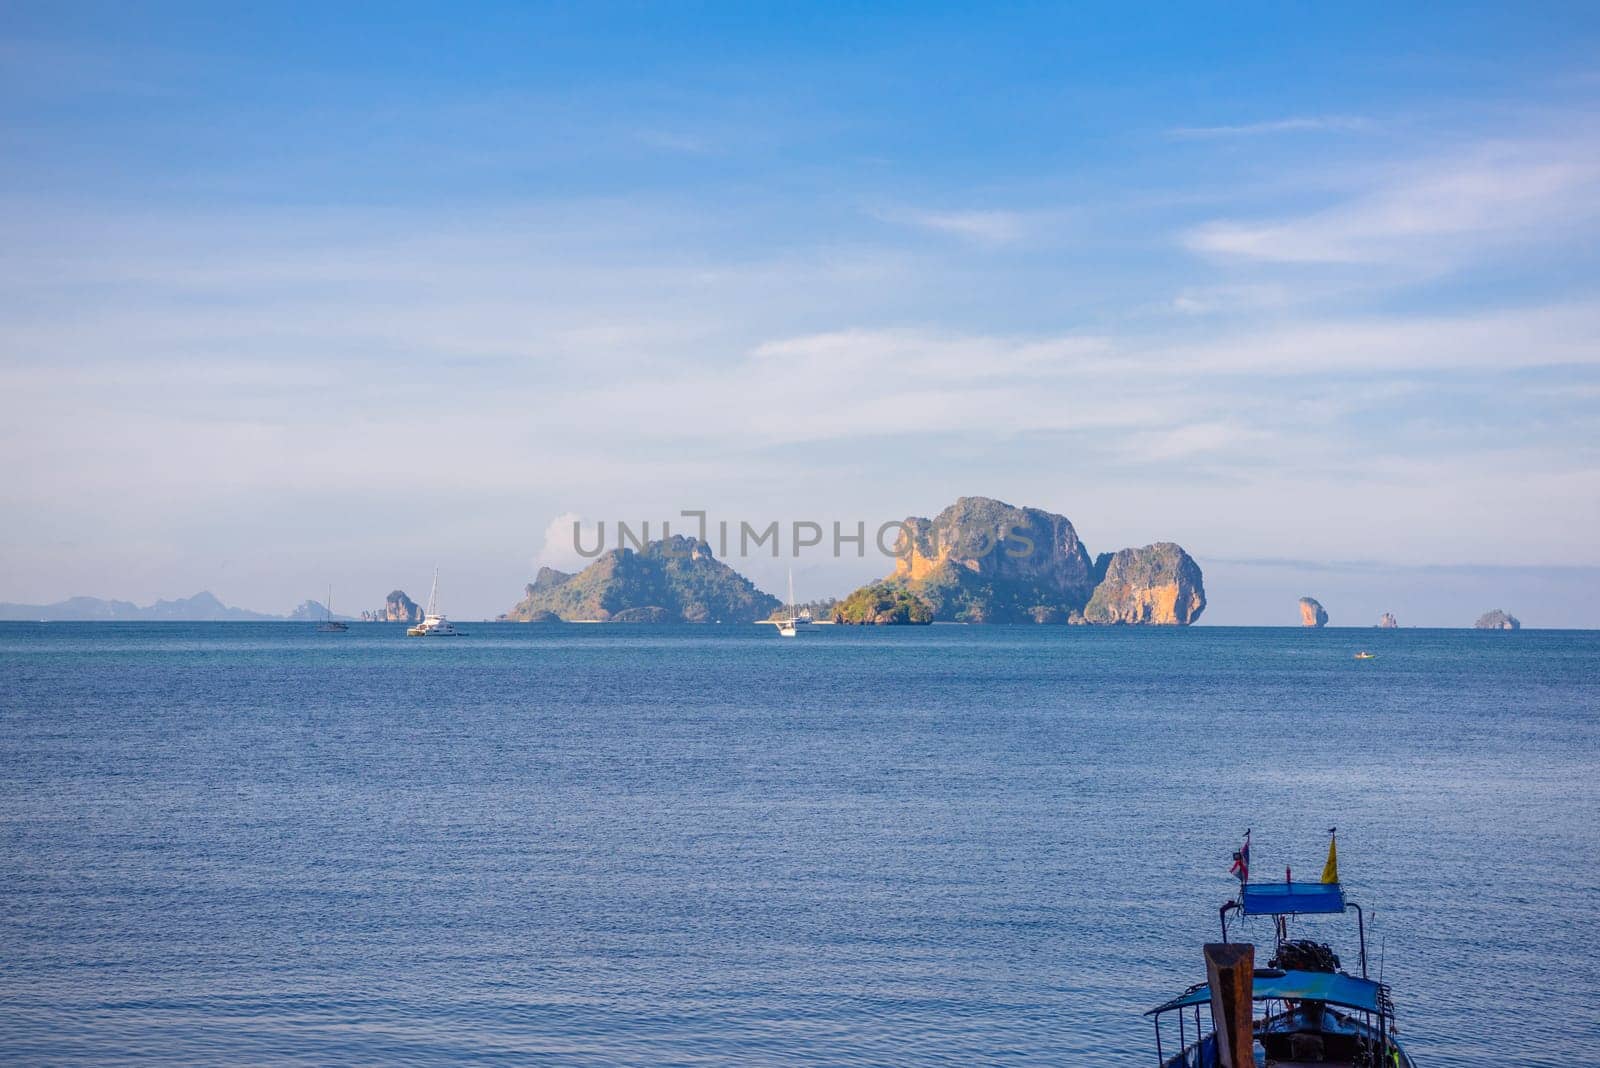 Sail boats with Ko Poda and Ko Kai Chicken Island in the background, Tonsai Bay, Railay Beach, Ao Nang, Krabi, Thailand by Eagle2308